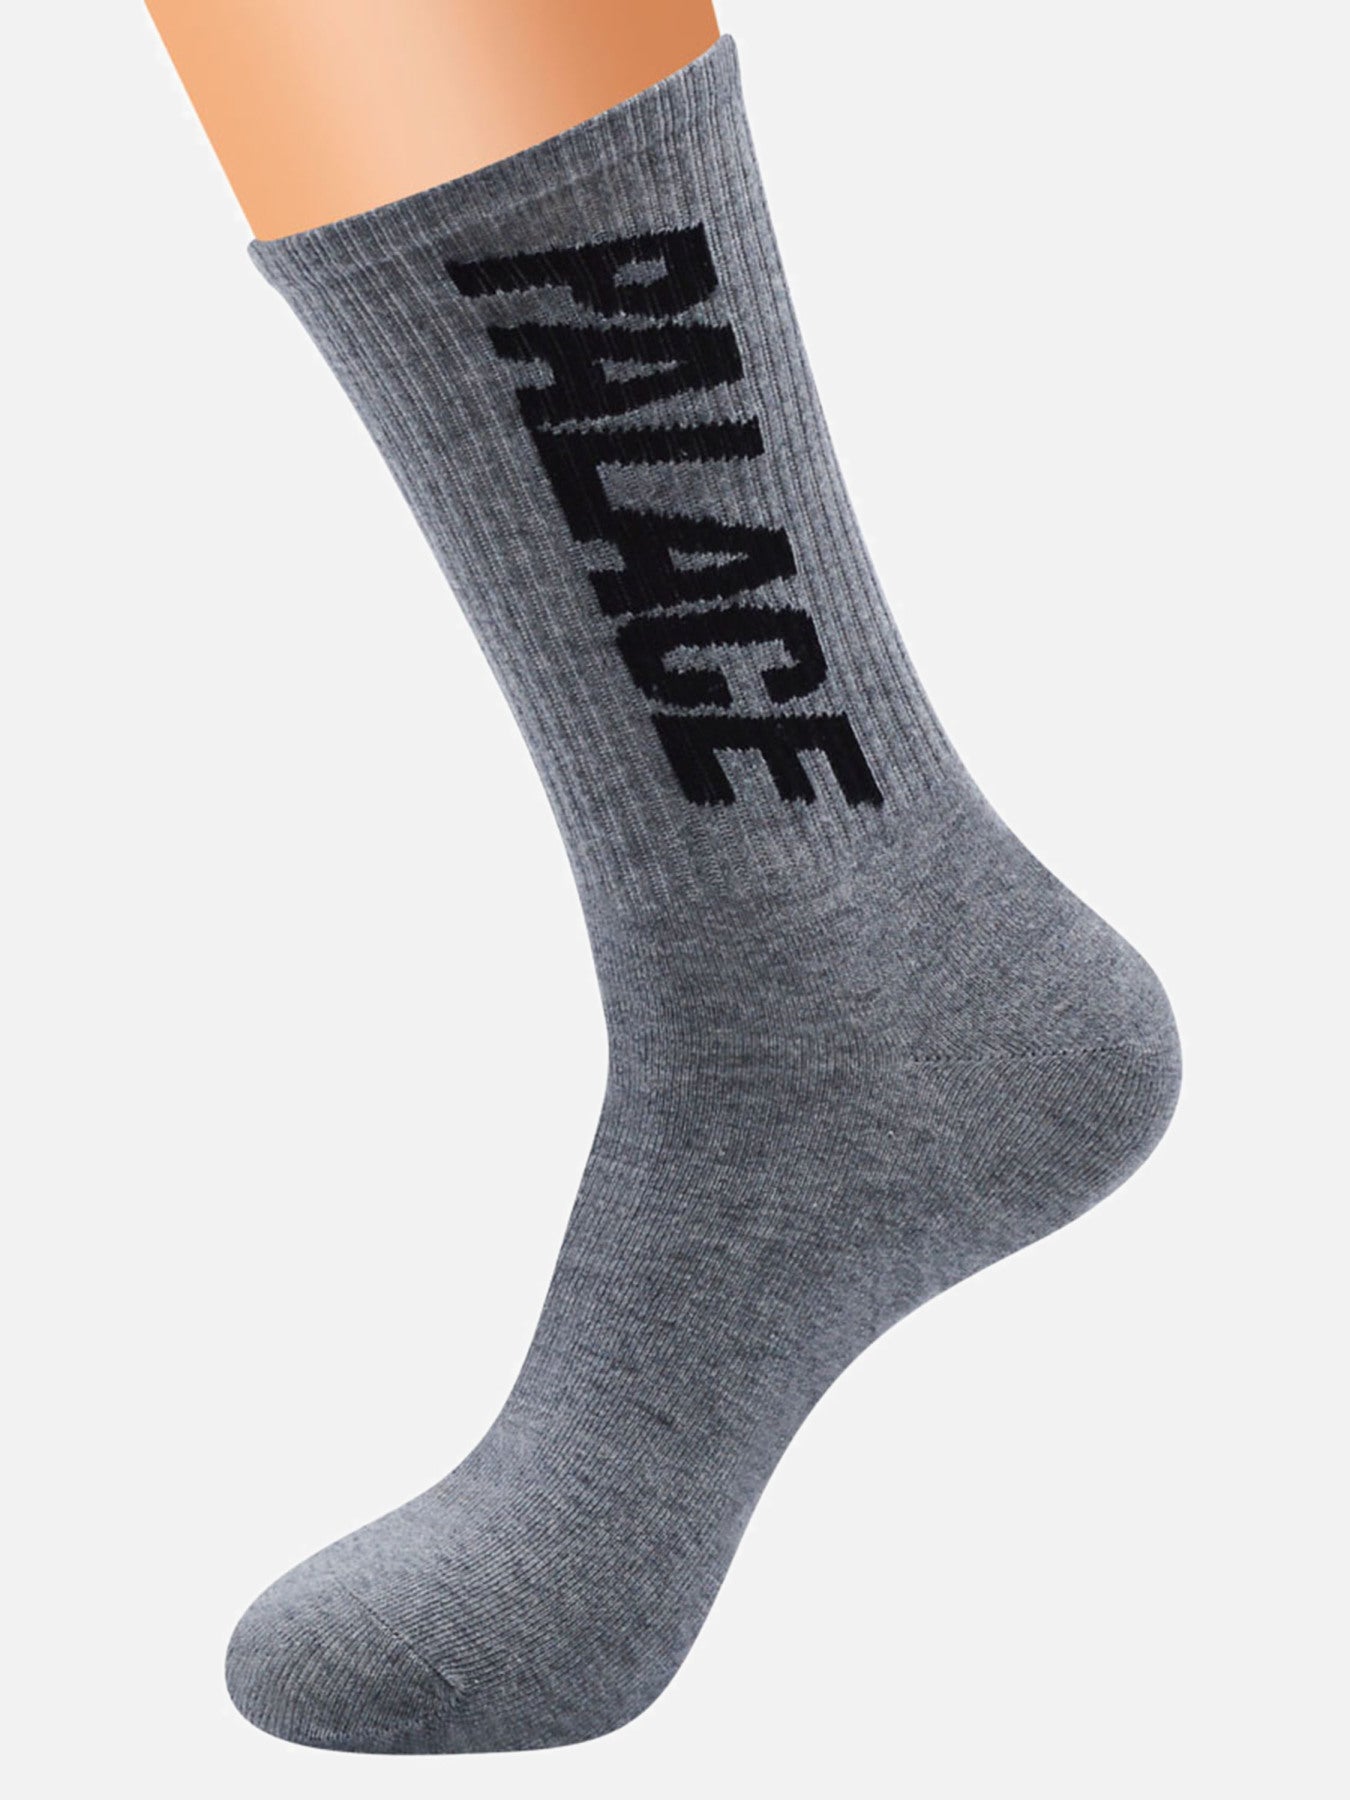 The Supermade American Street Trend Hundred Match Socks - 1709